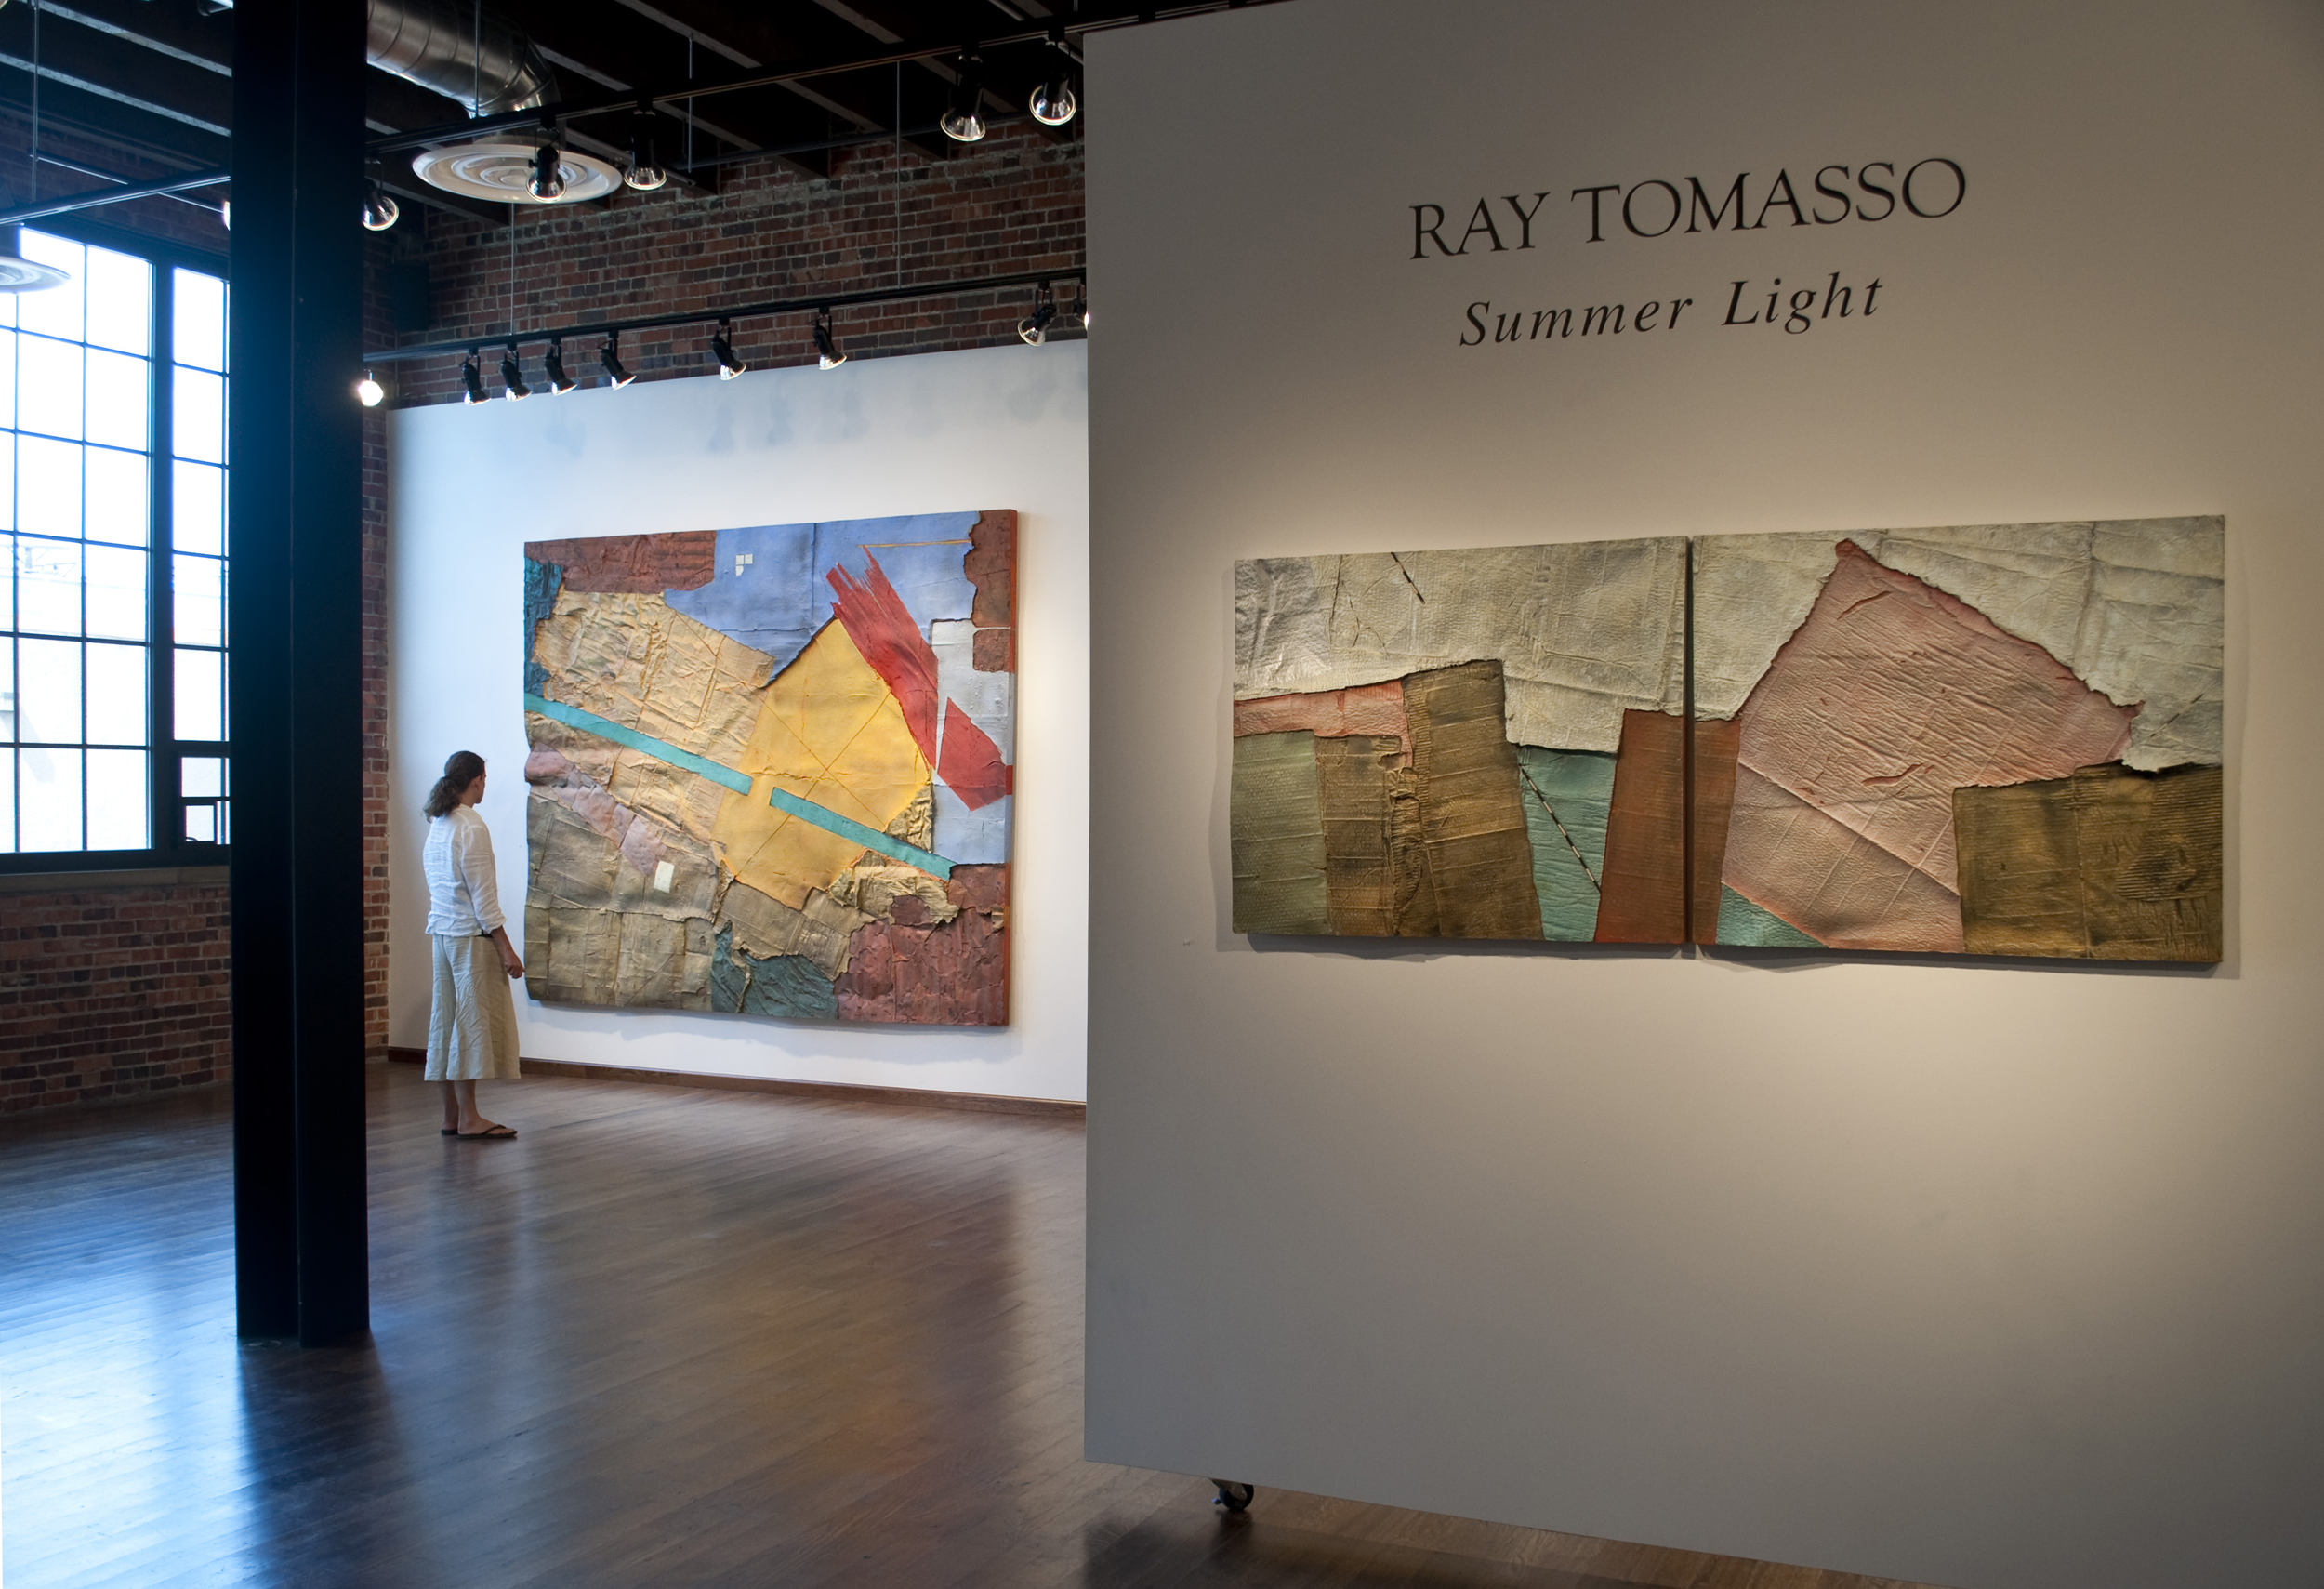 Ray Tomasso Exhibit "Summer Light"